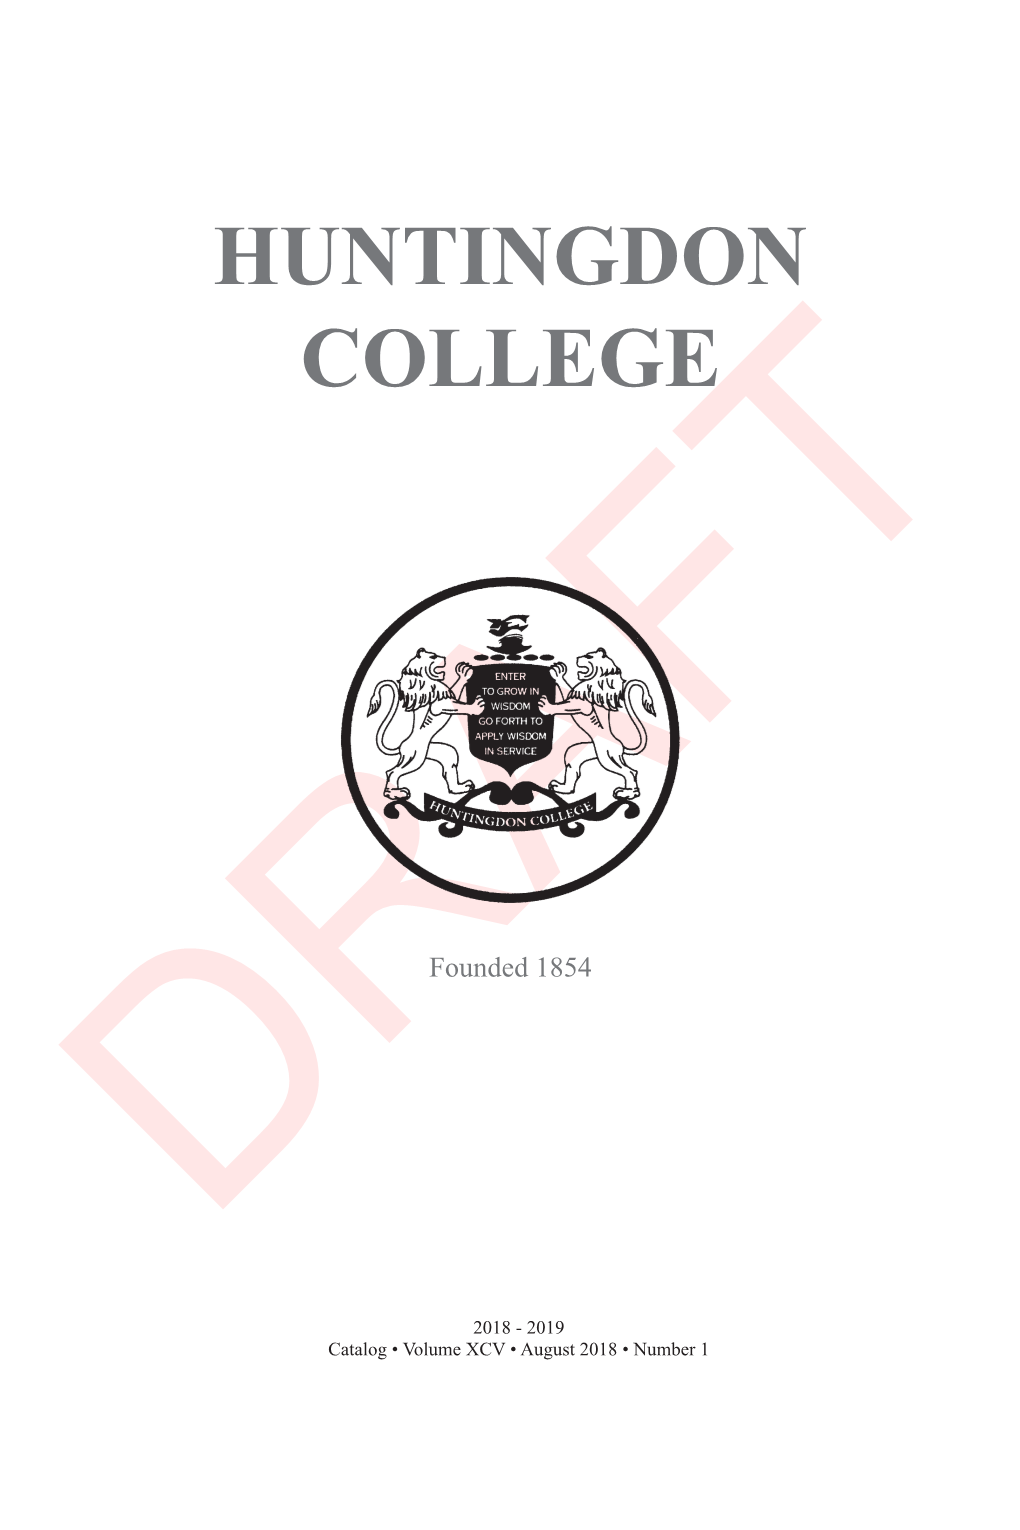 About Huntingdon College 1 Purpose